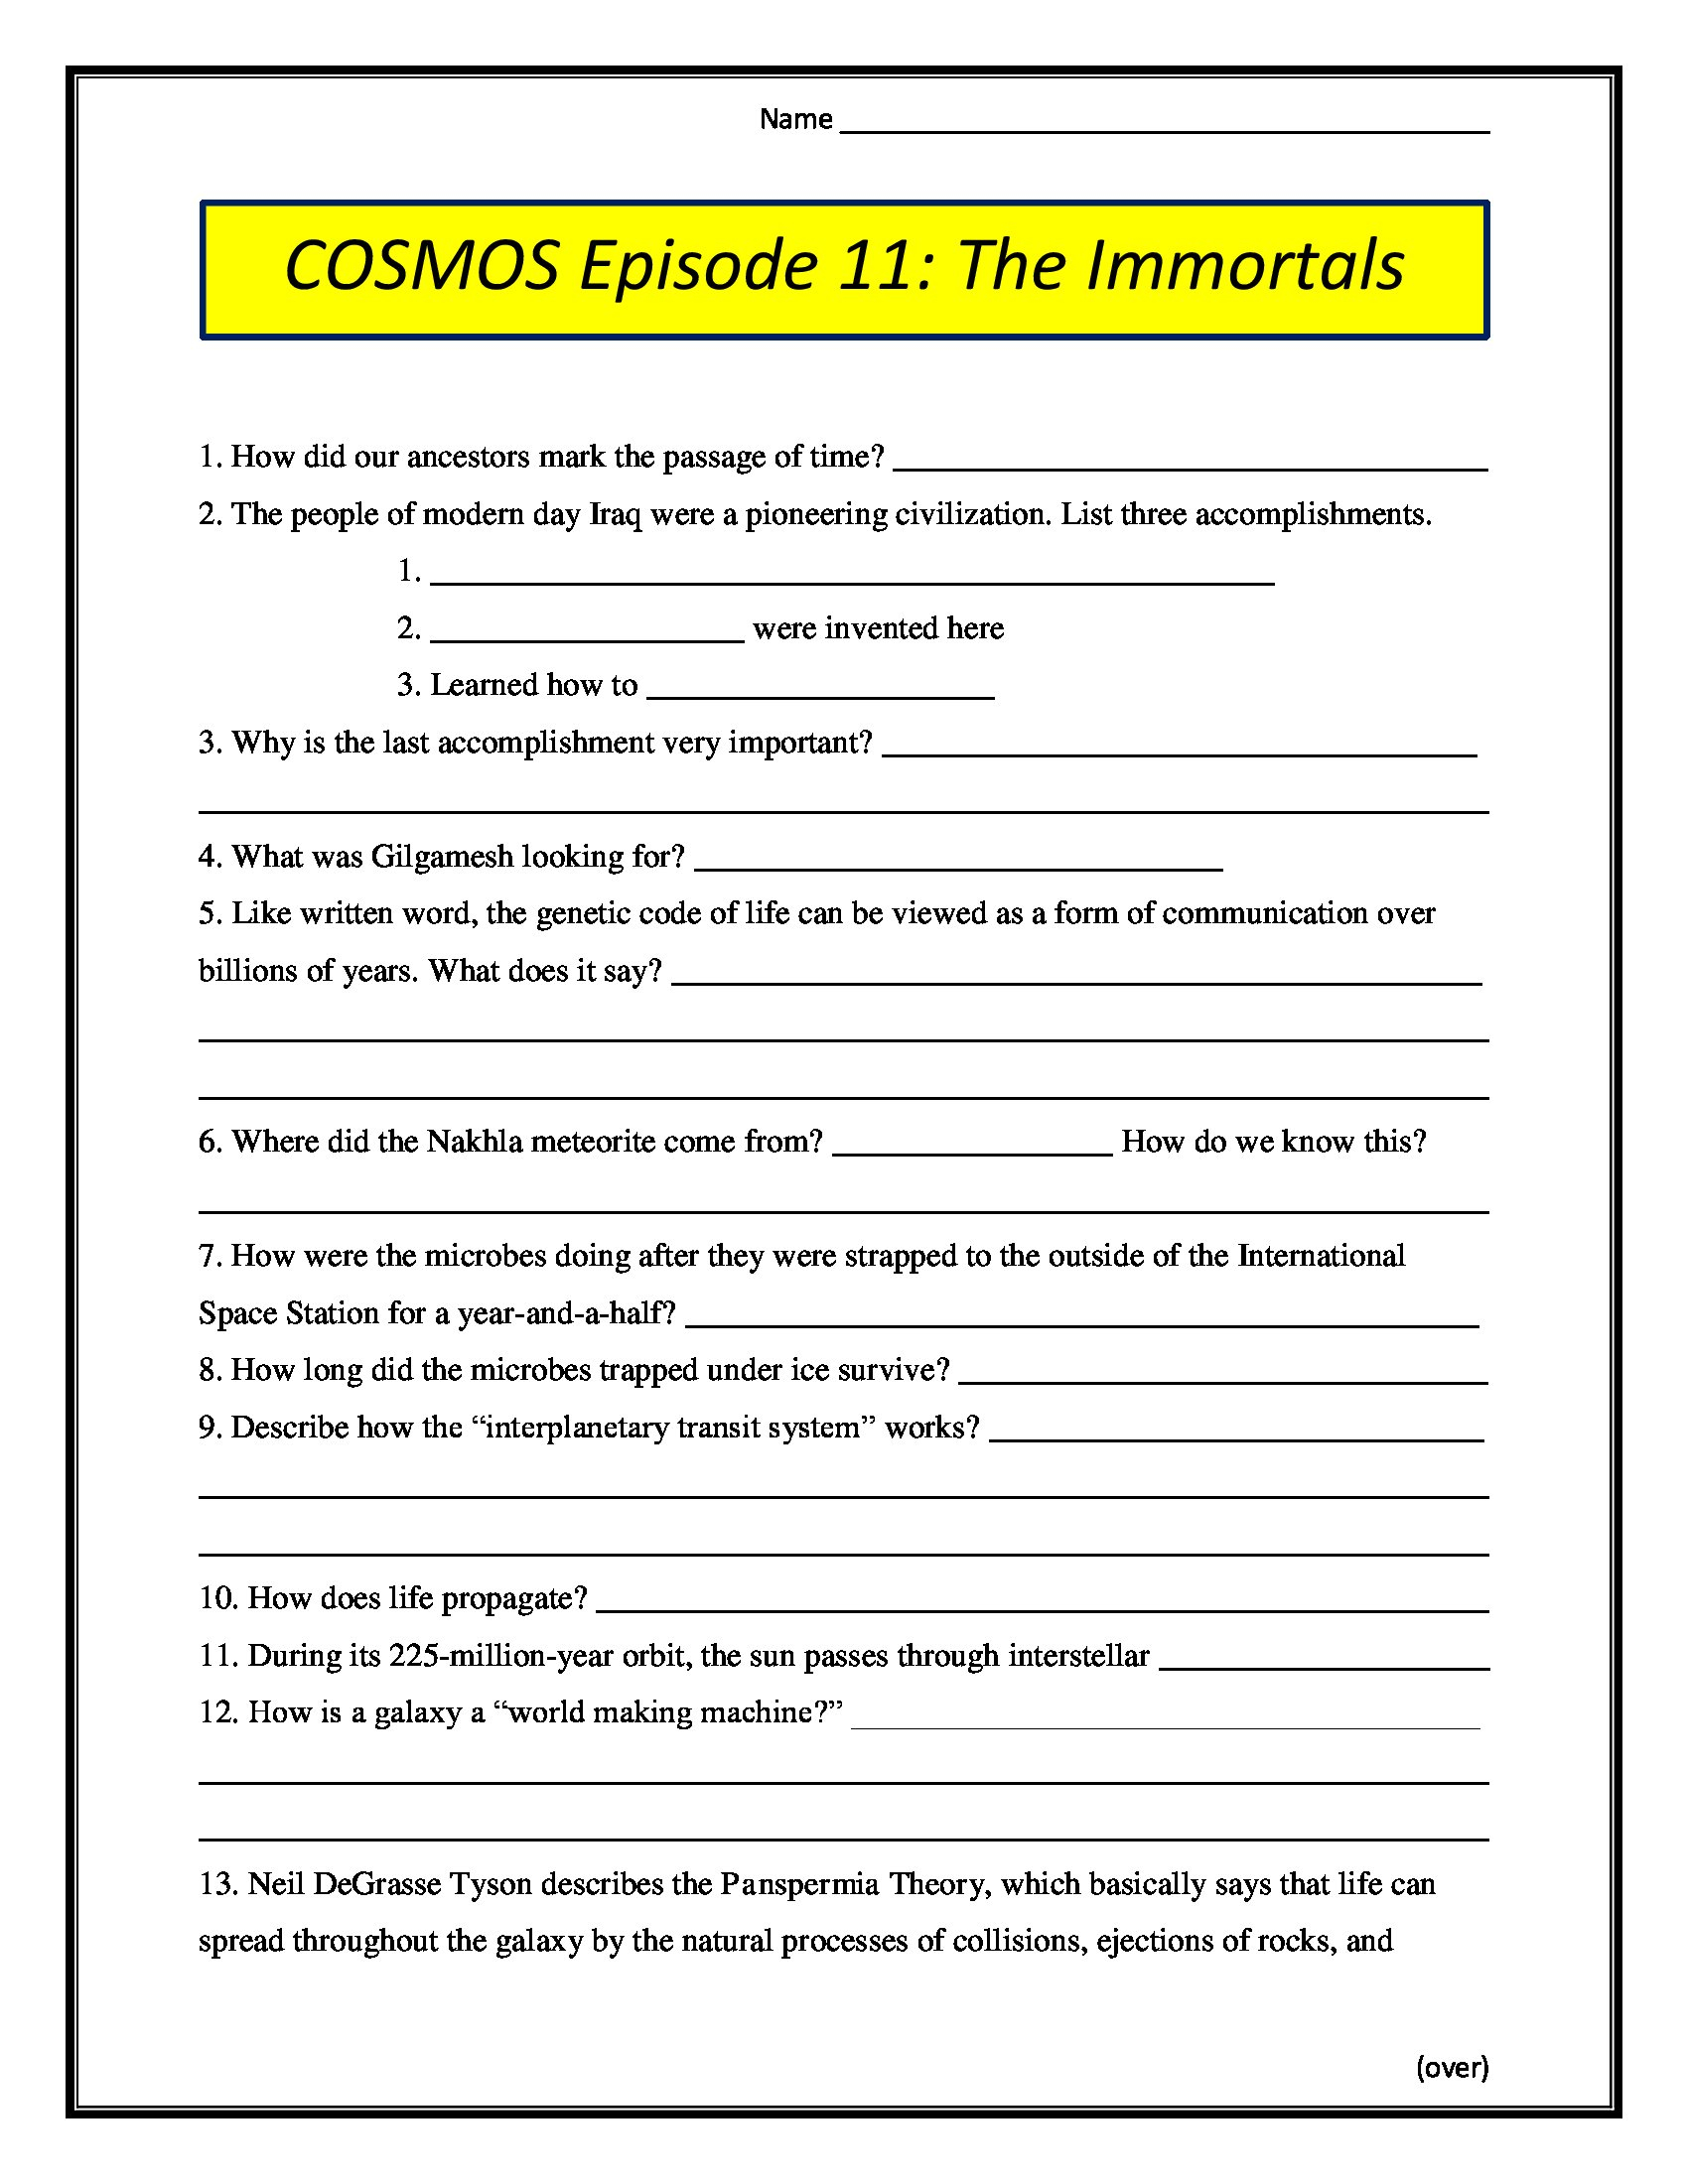 Cosmos Episode 11 The Immortals Worksheet 2014  Conceptual Throughout Cosmos Episode 12 Worksheet Answers